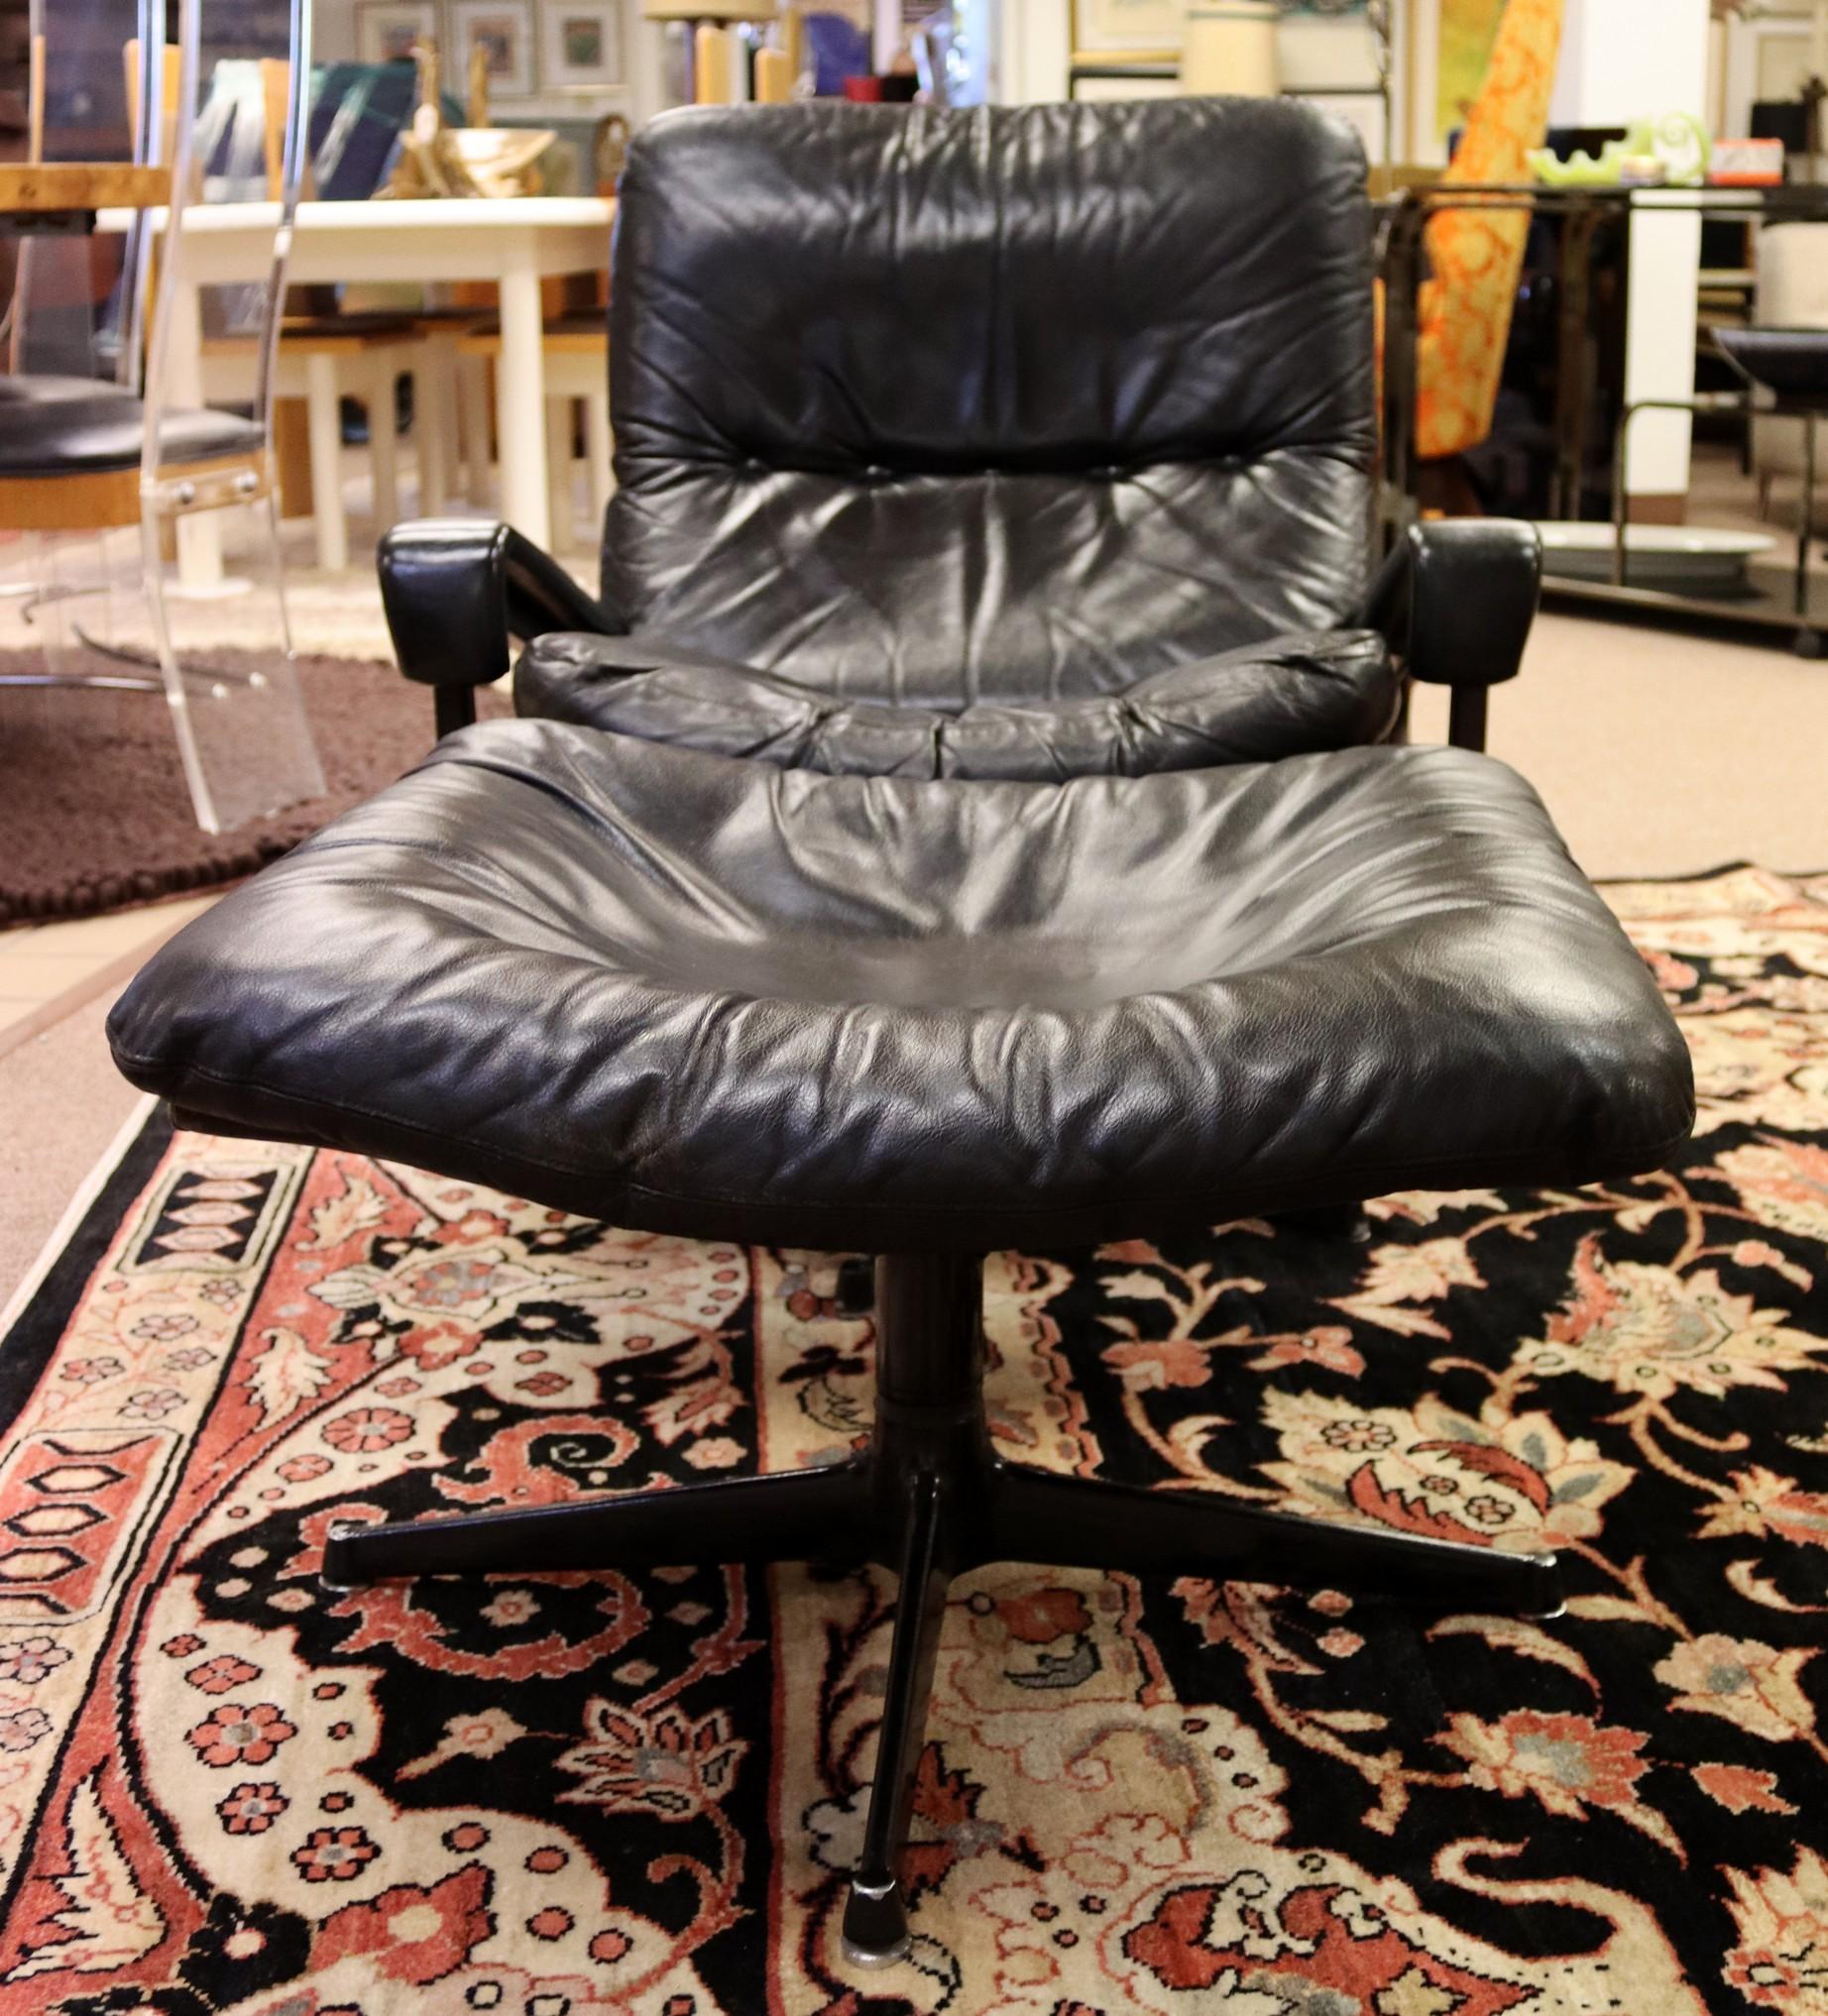 Late 20th Century Mid-Century Modern Black Leather Lounge Chair & Ottoman Set 1970s